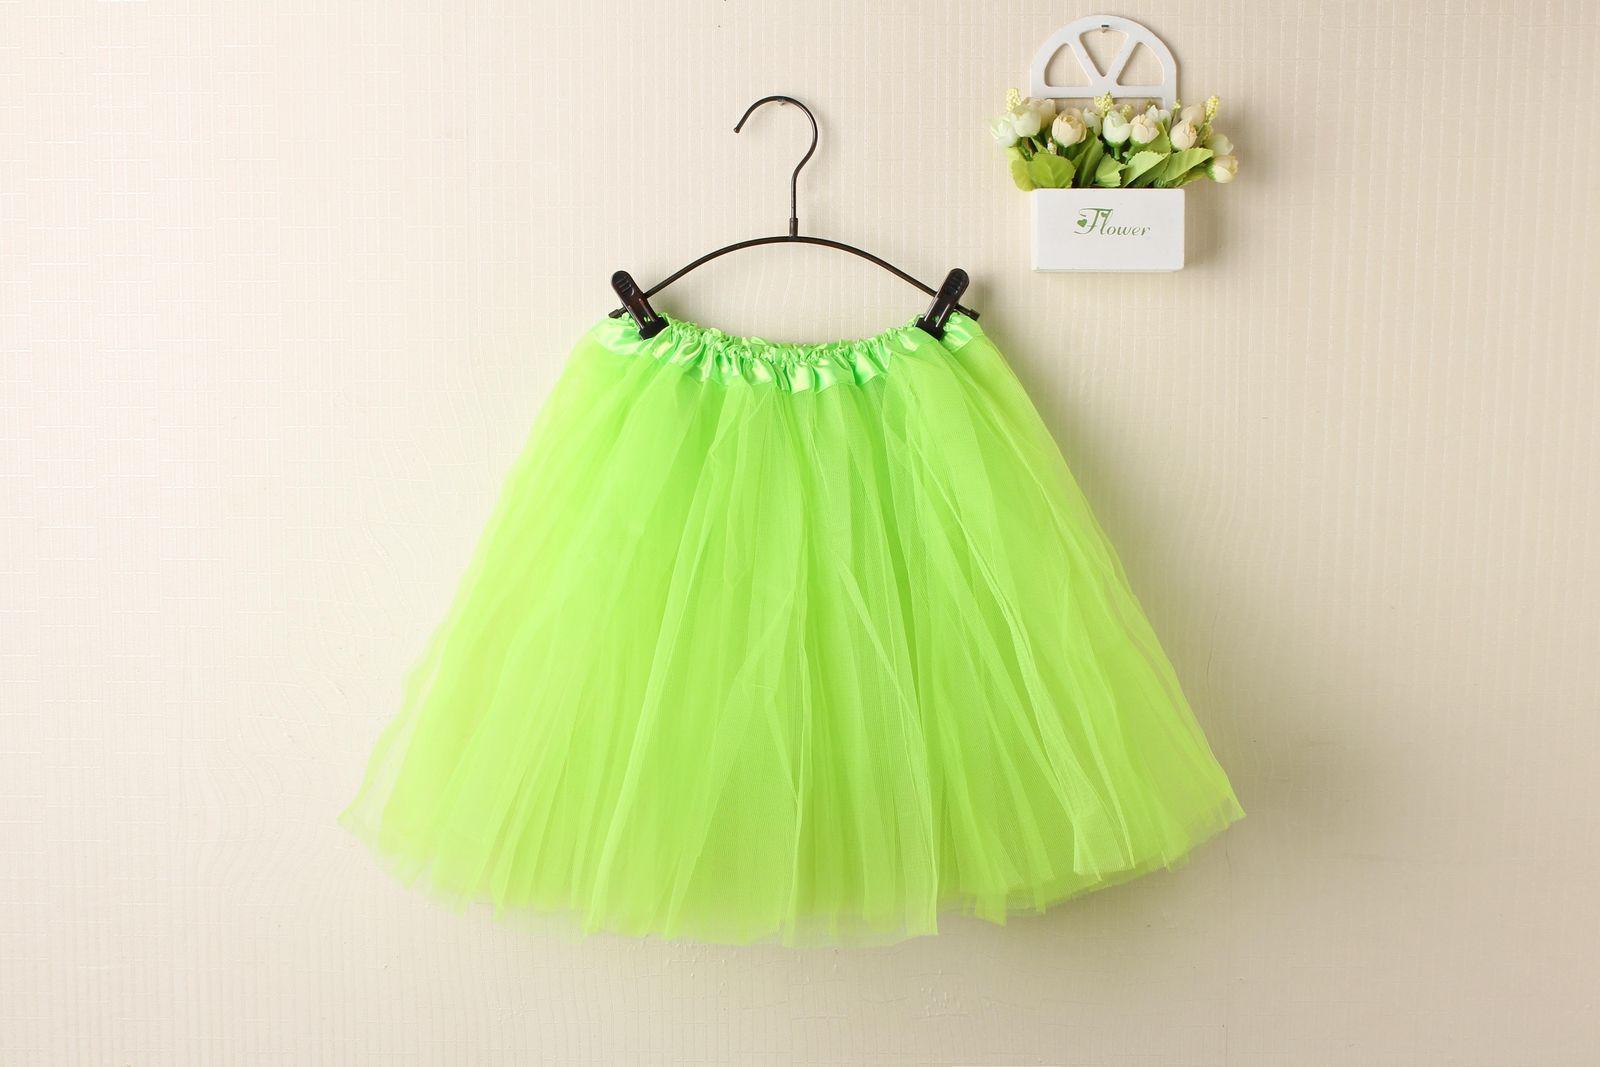 New Adults Tulle Tutu Skirt Dressup Party Costume Ballet Womens Girls Dance Wear - Neon Green (Size: Kids)